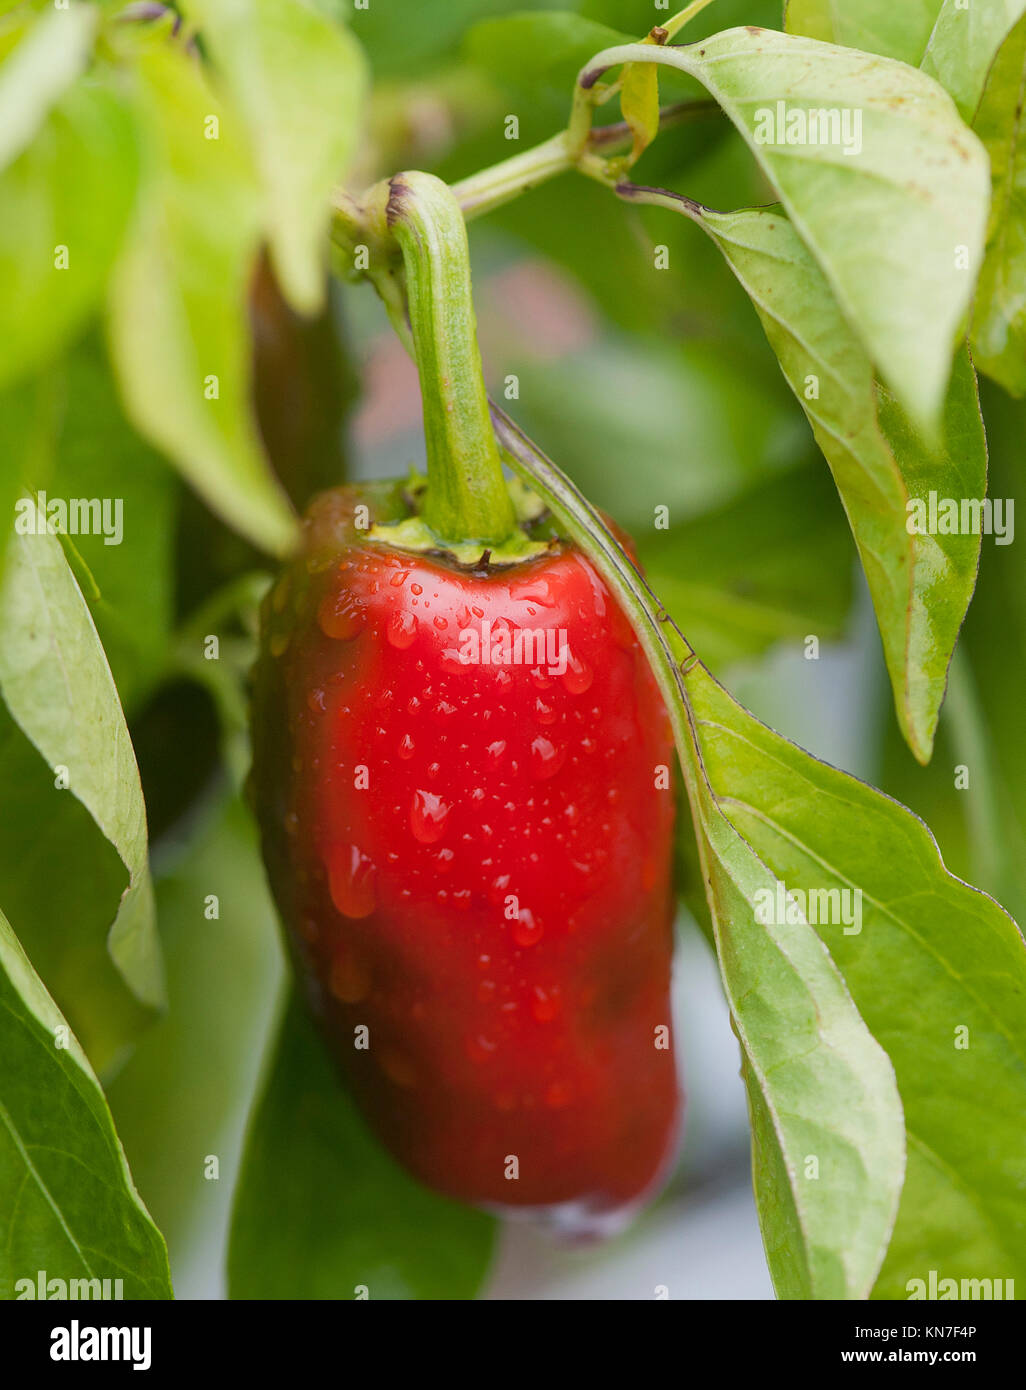 A Clay pepper hangs on a vine on a farm Stock Photo